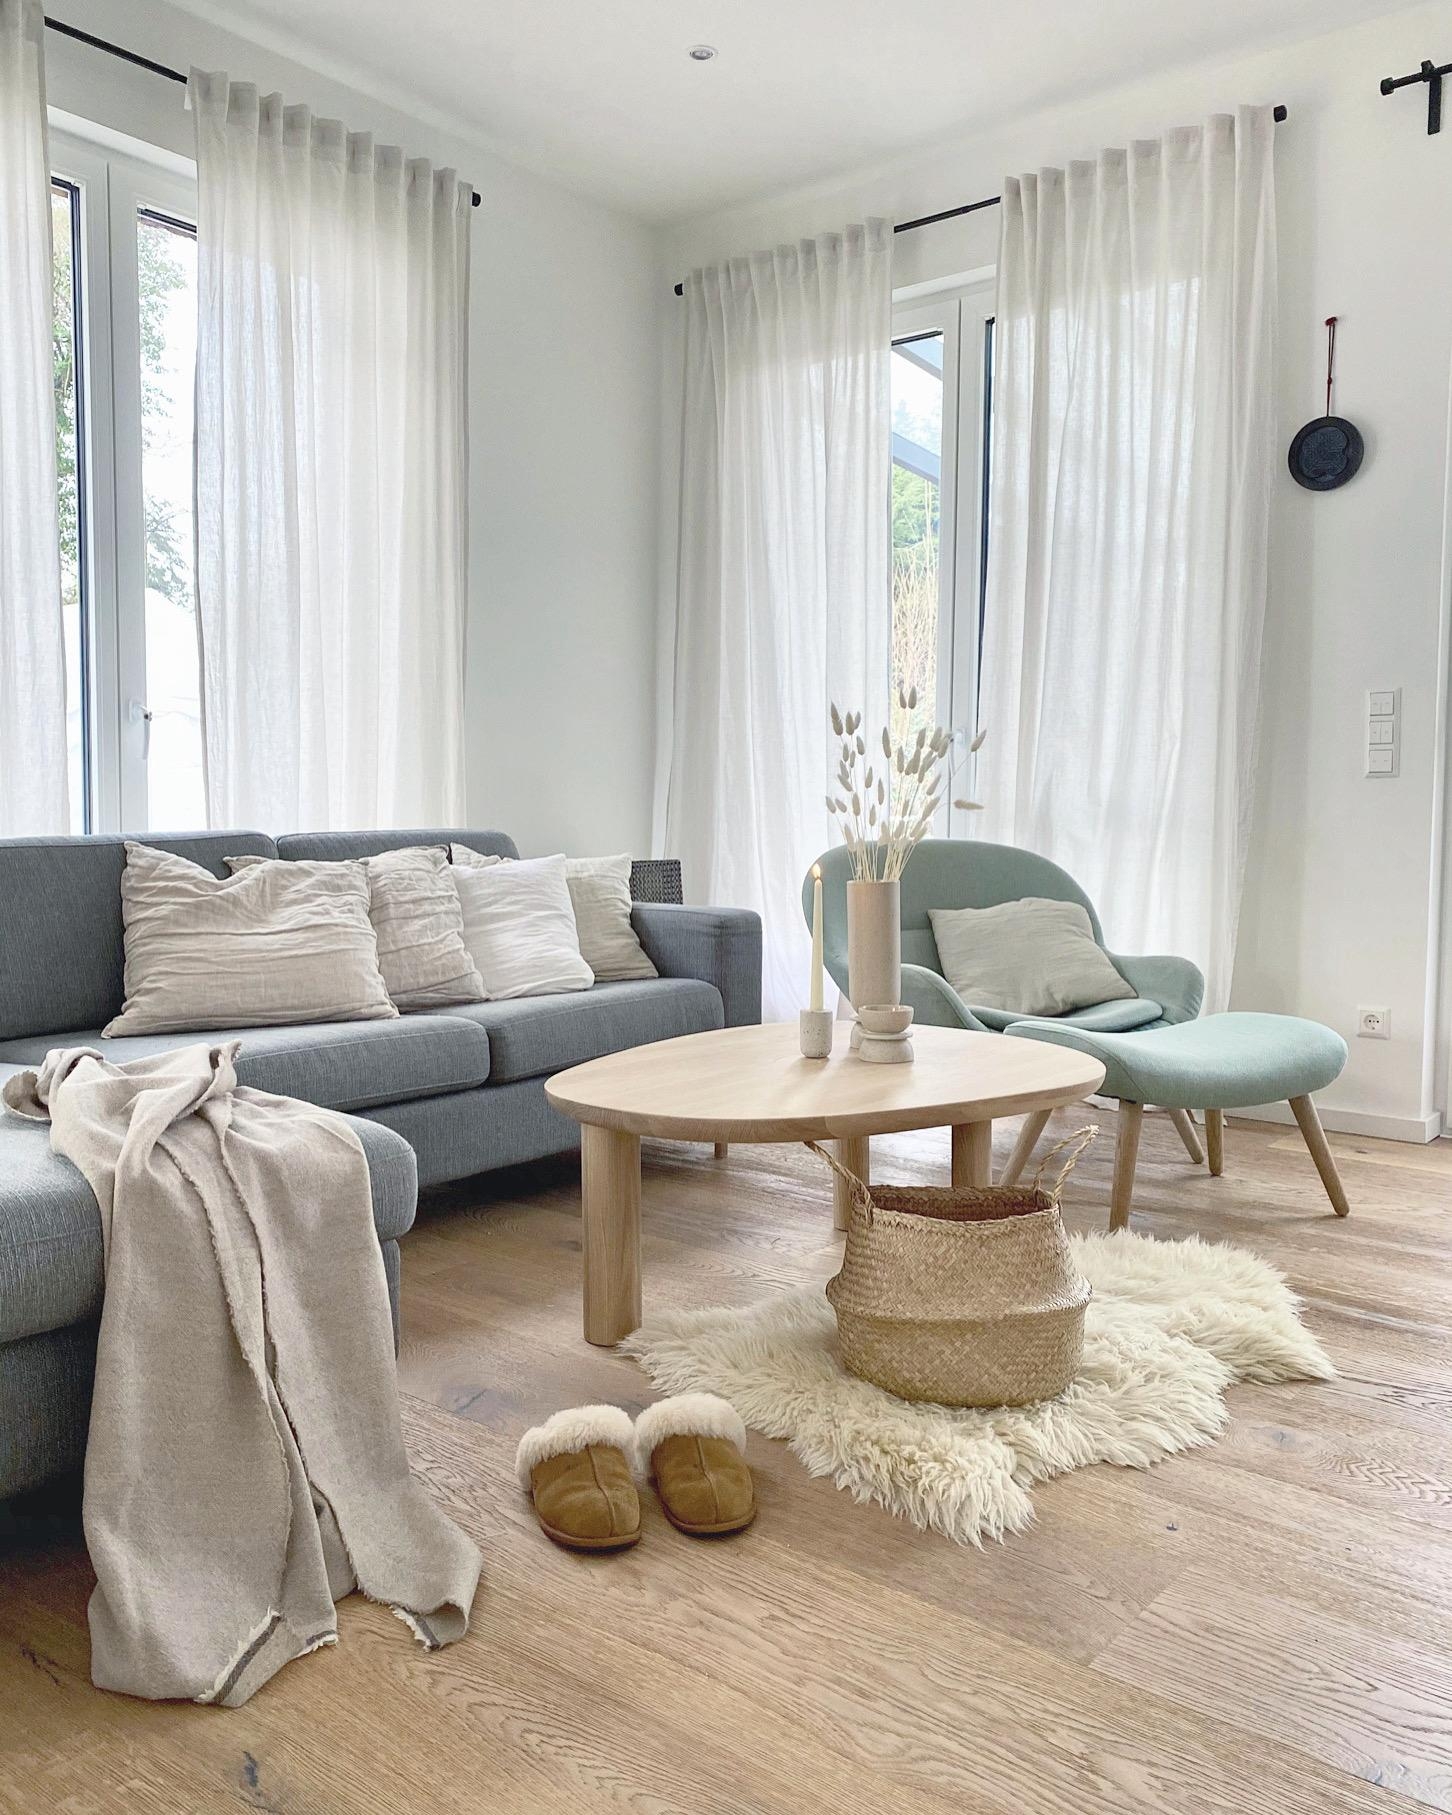 Home Sweet Home 🤎
#wohnzimmer#interior#couchstyle#couchliebt#hygge#cozy